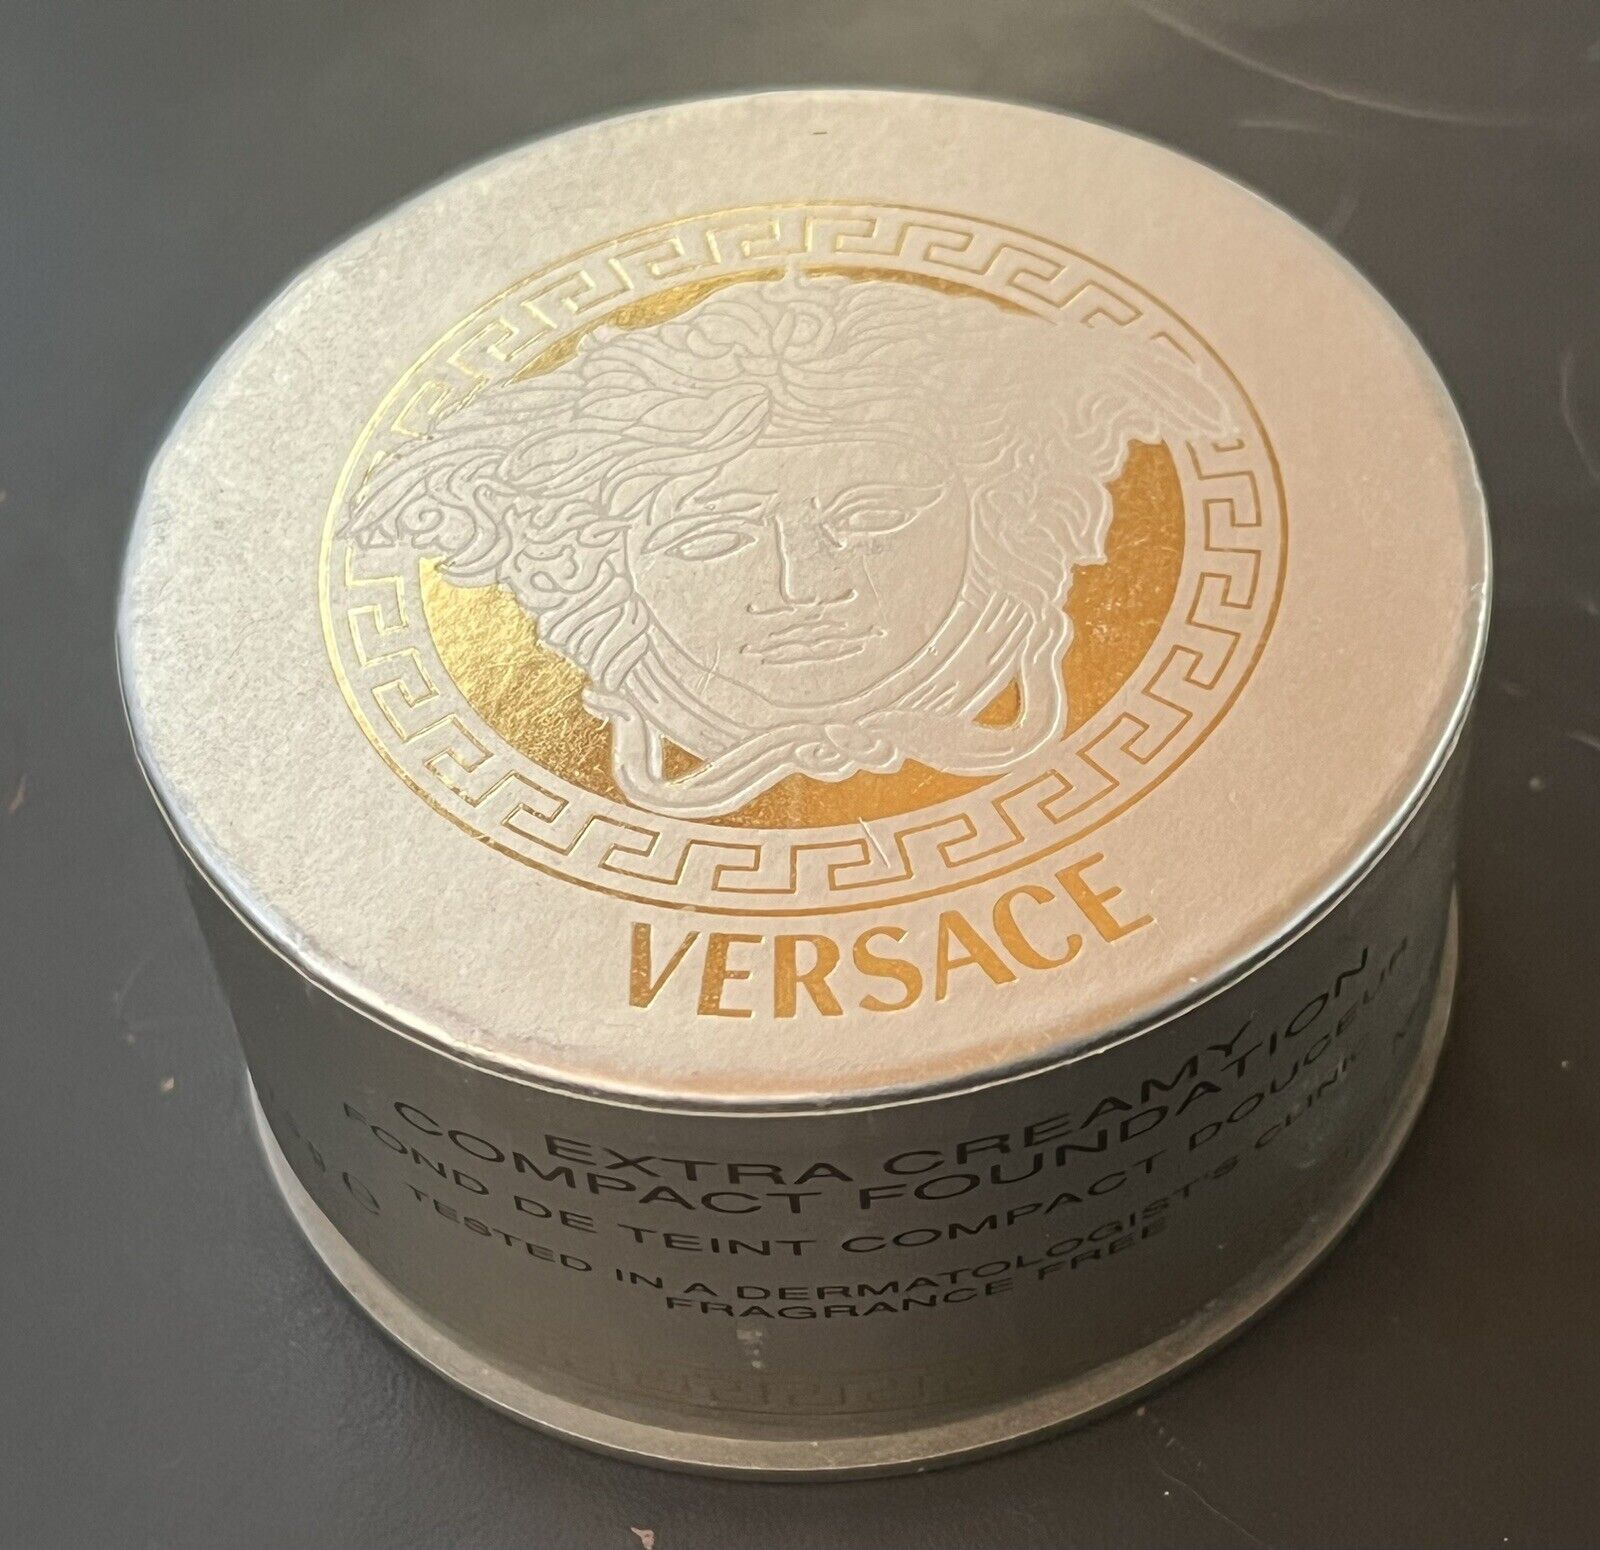 VTG. 2004 Versace Medusa  EXTRA CREAMY COMPACT FOUNDATION POWDER~Italy~ W/ Box